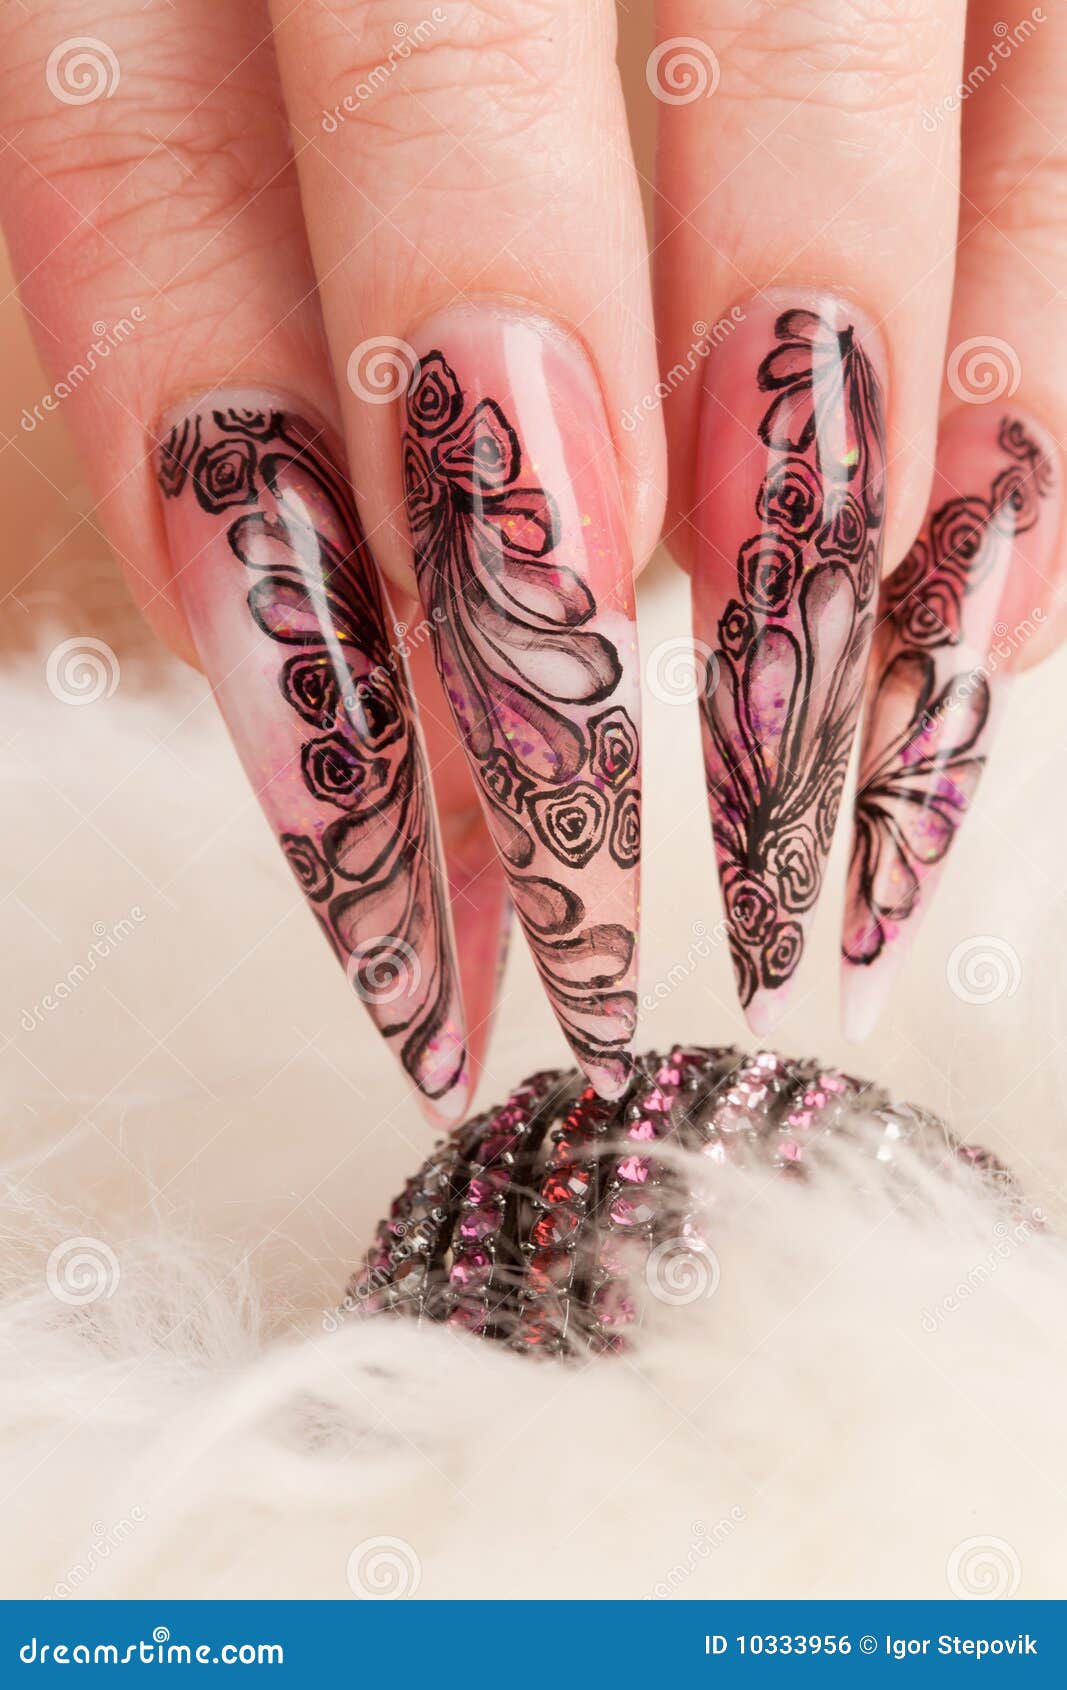 human hand with long fingernail